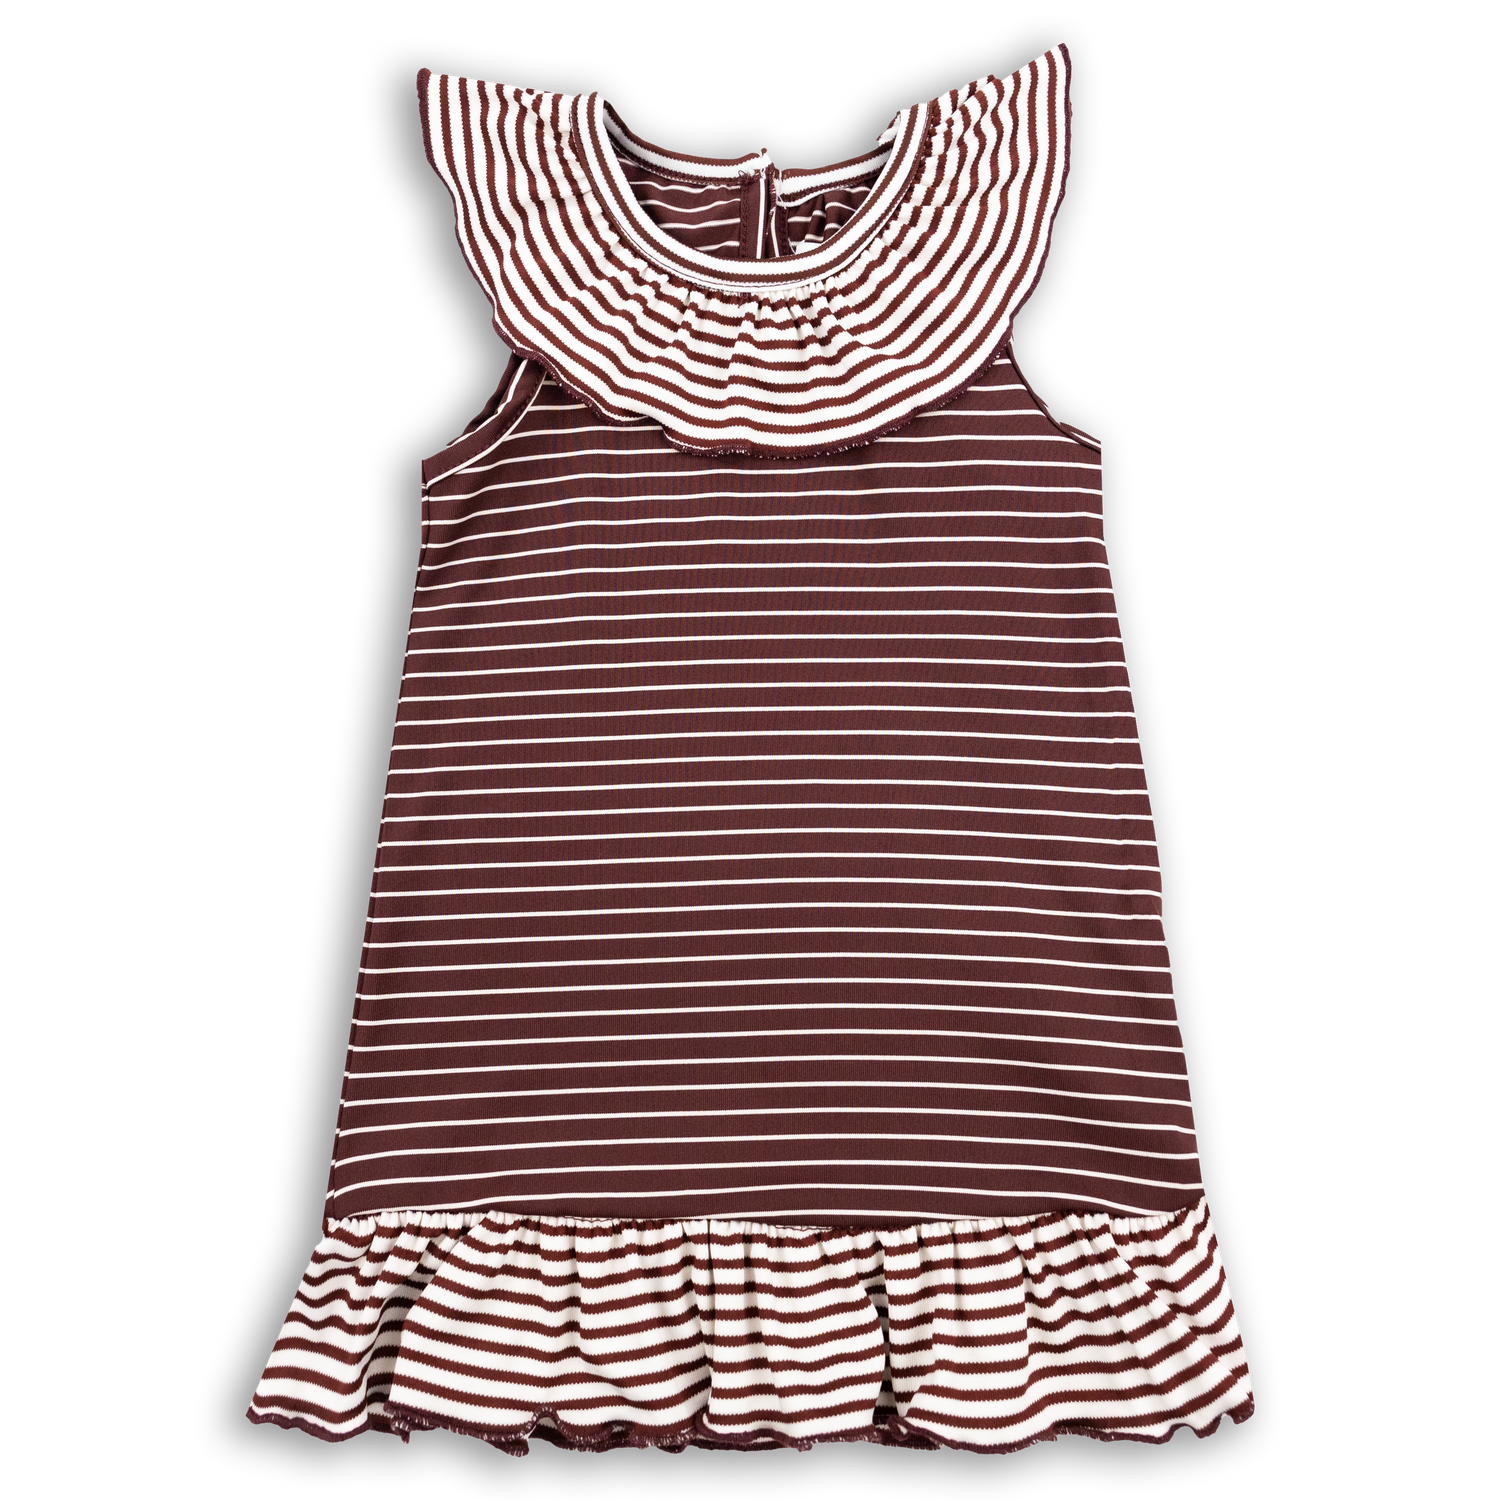 Maroon & White Striped Infant/Toddler Dress